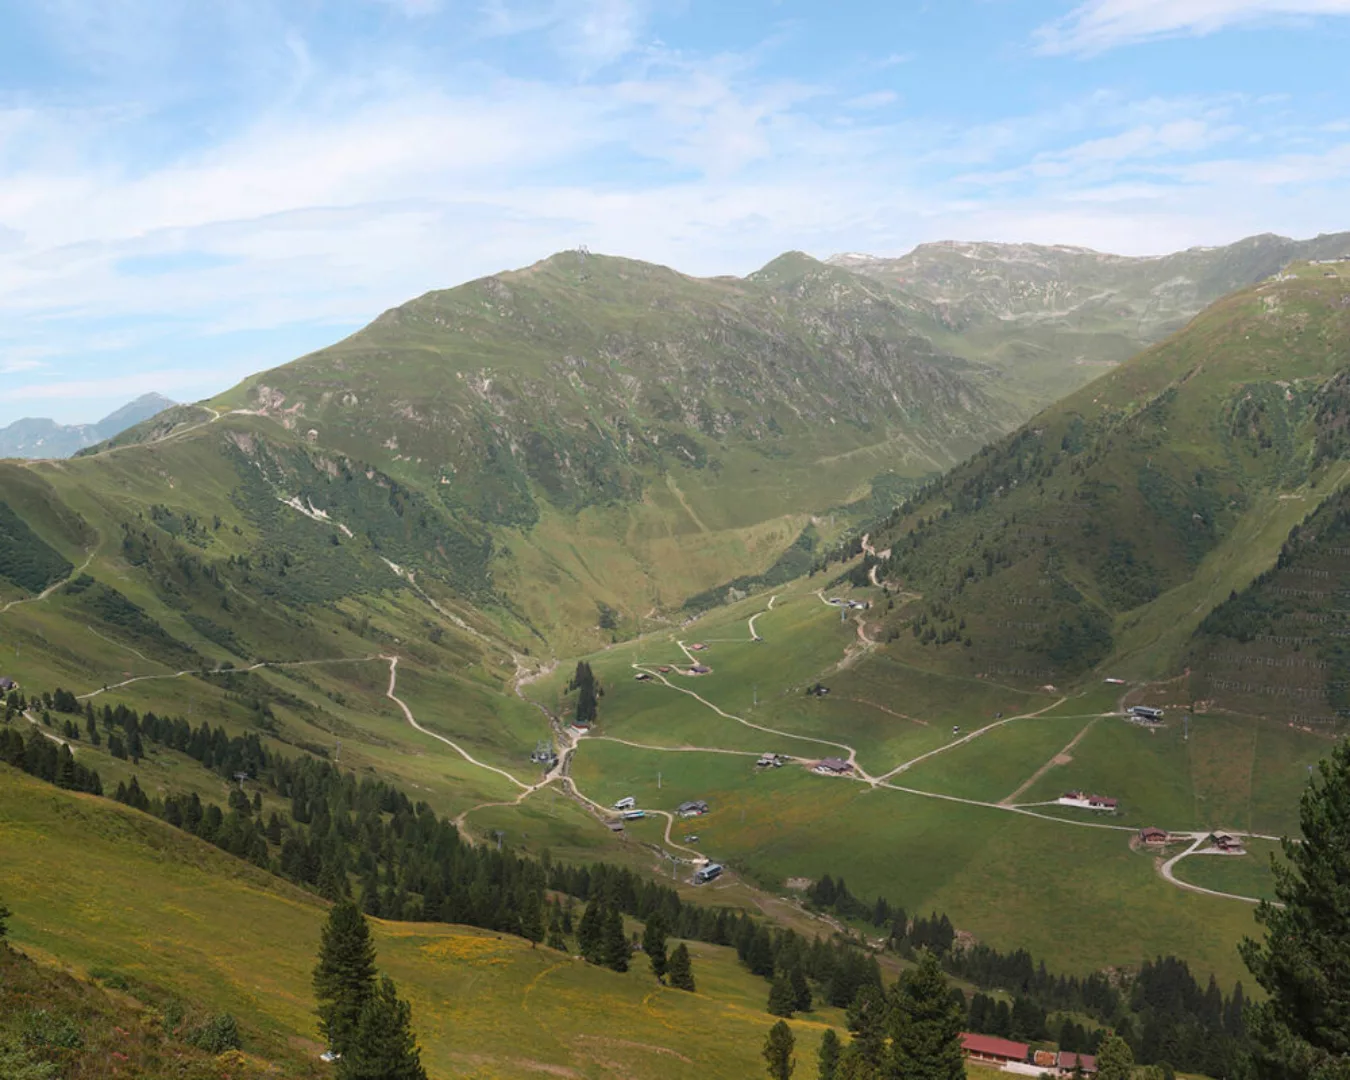 Fototapete "Talblick Alpen" 4,00x2,50 m / Glattvlies Perlmutt günstig online kaufen